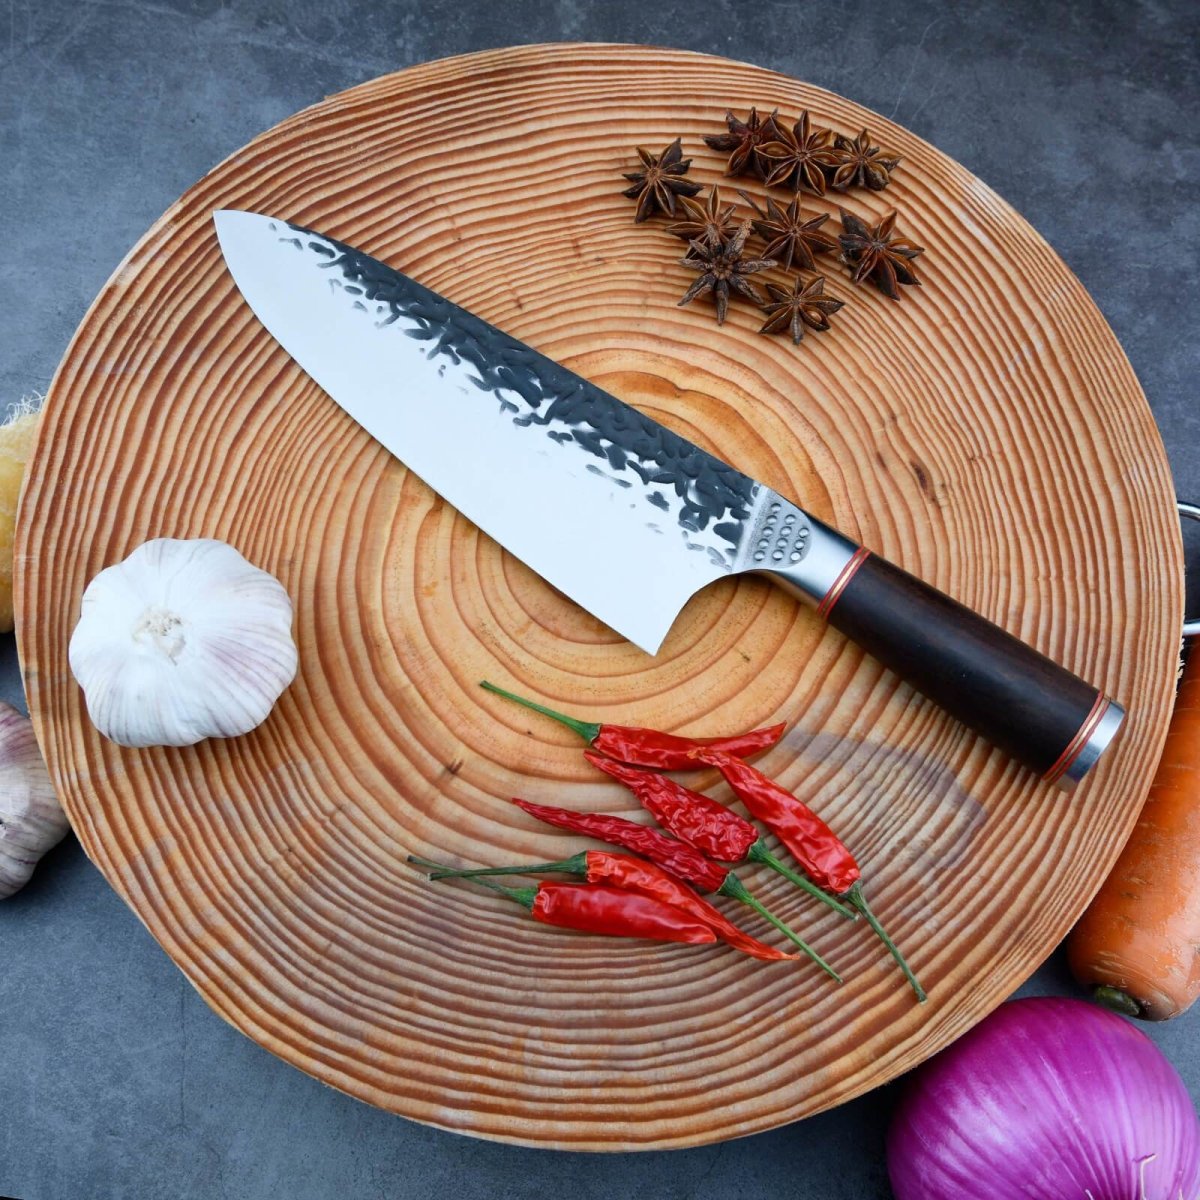 Gyuto Chef Knife, 8